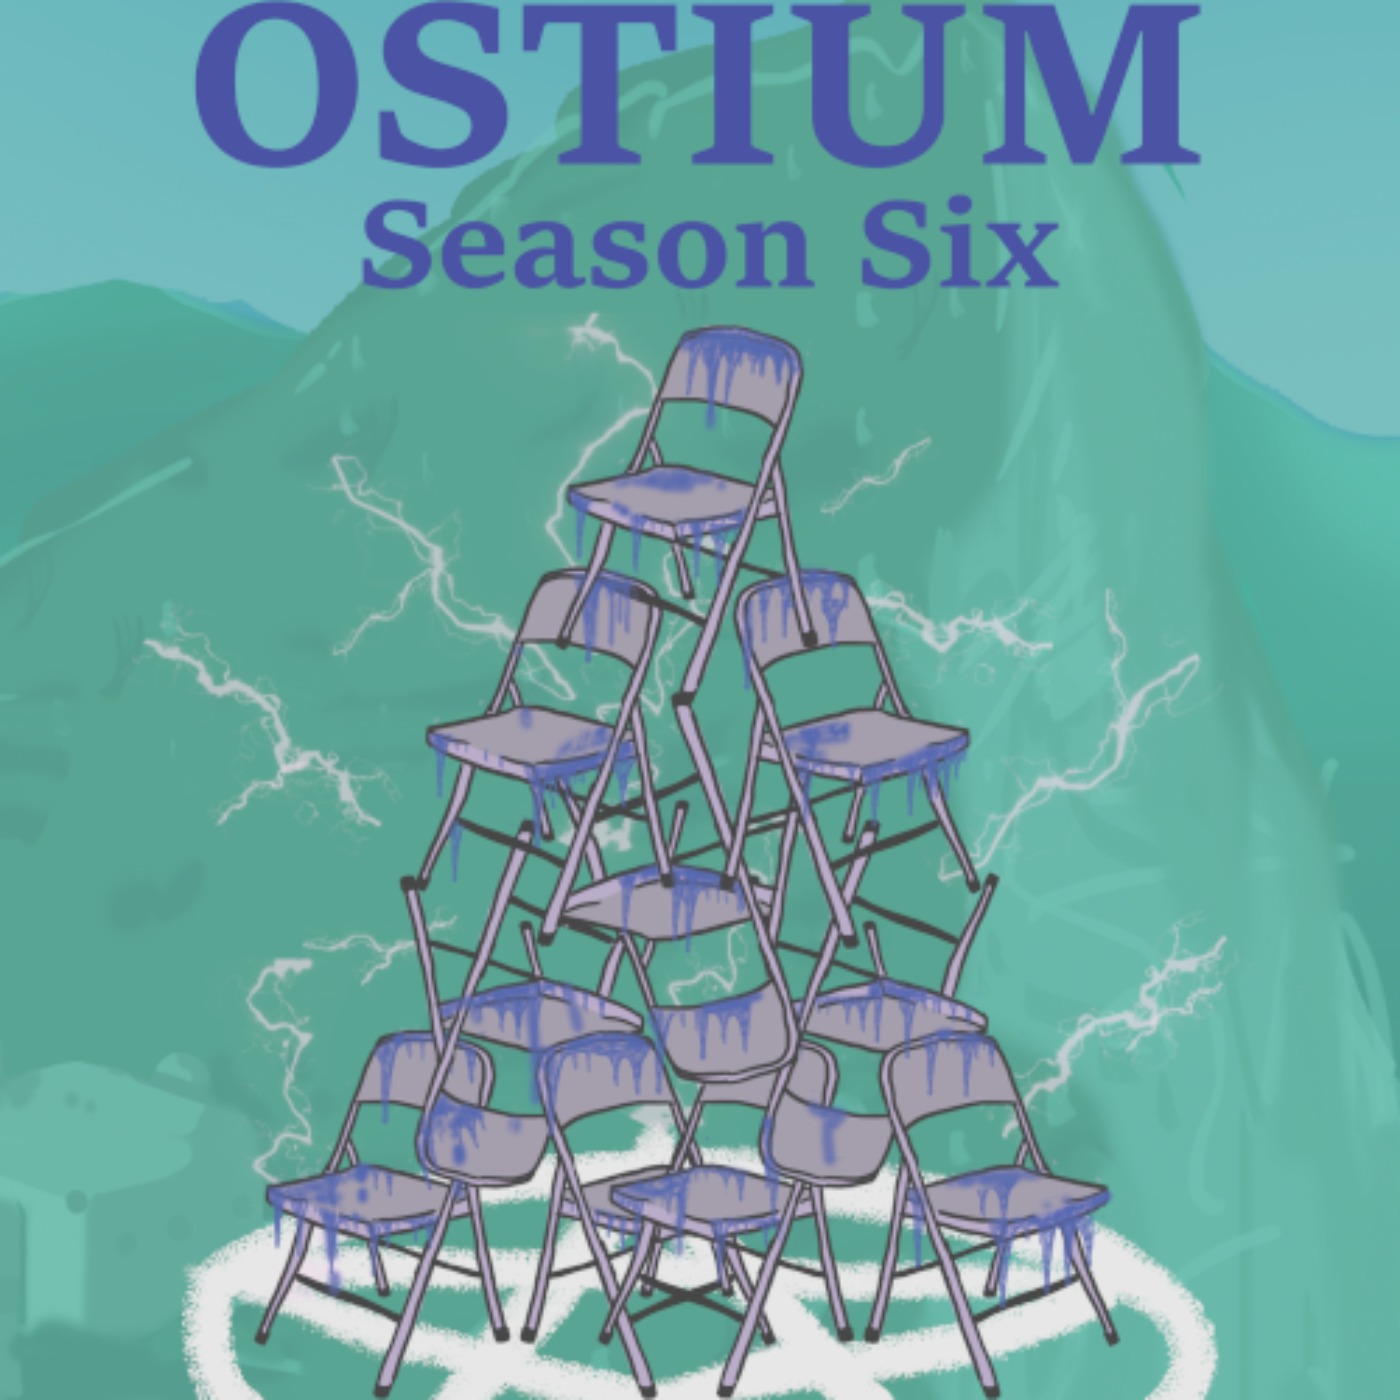 Ostium Second Half Trailer to Season Six